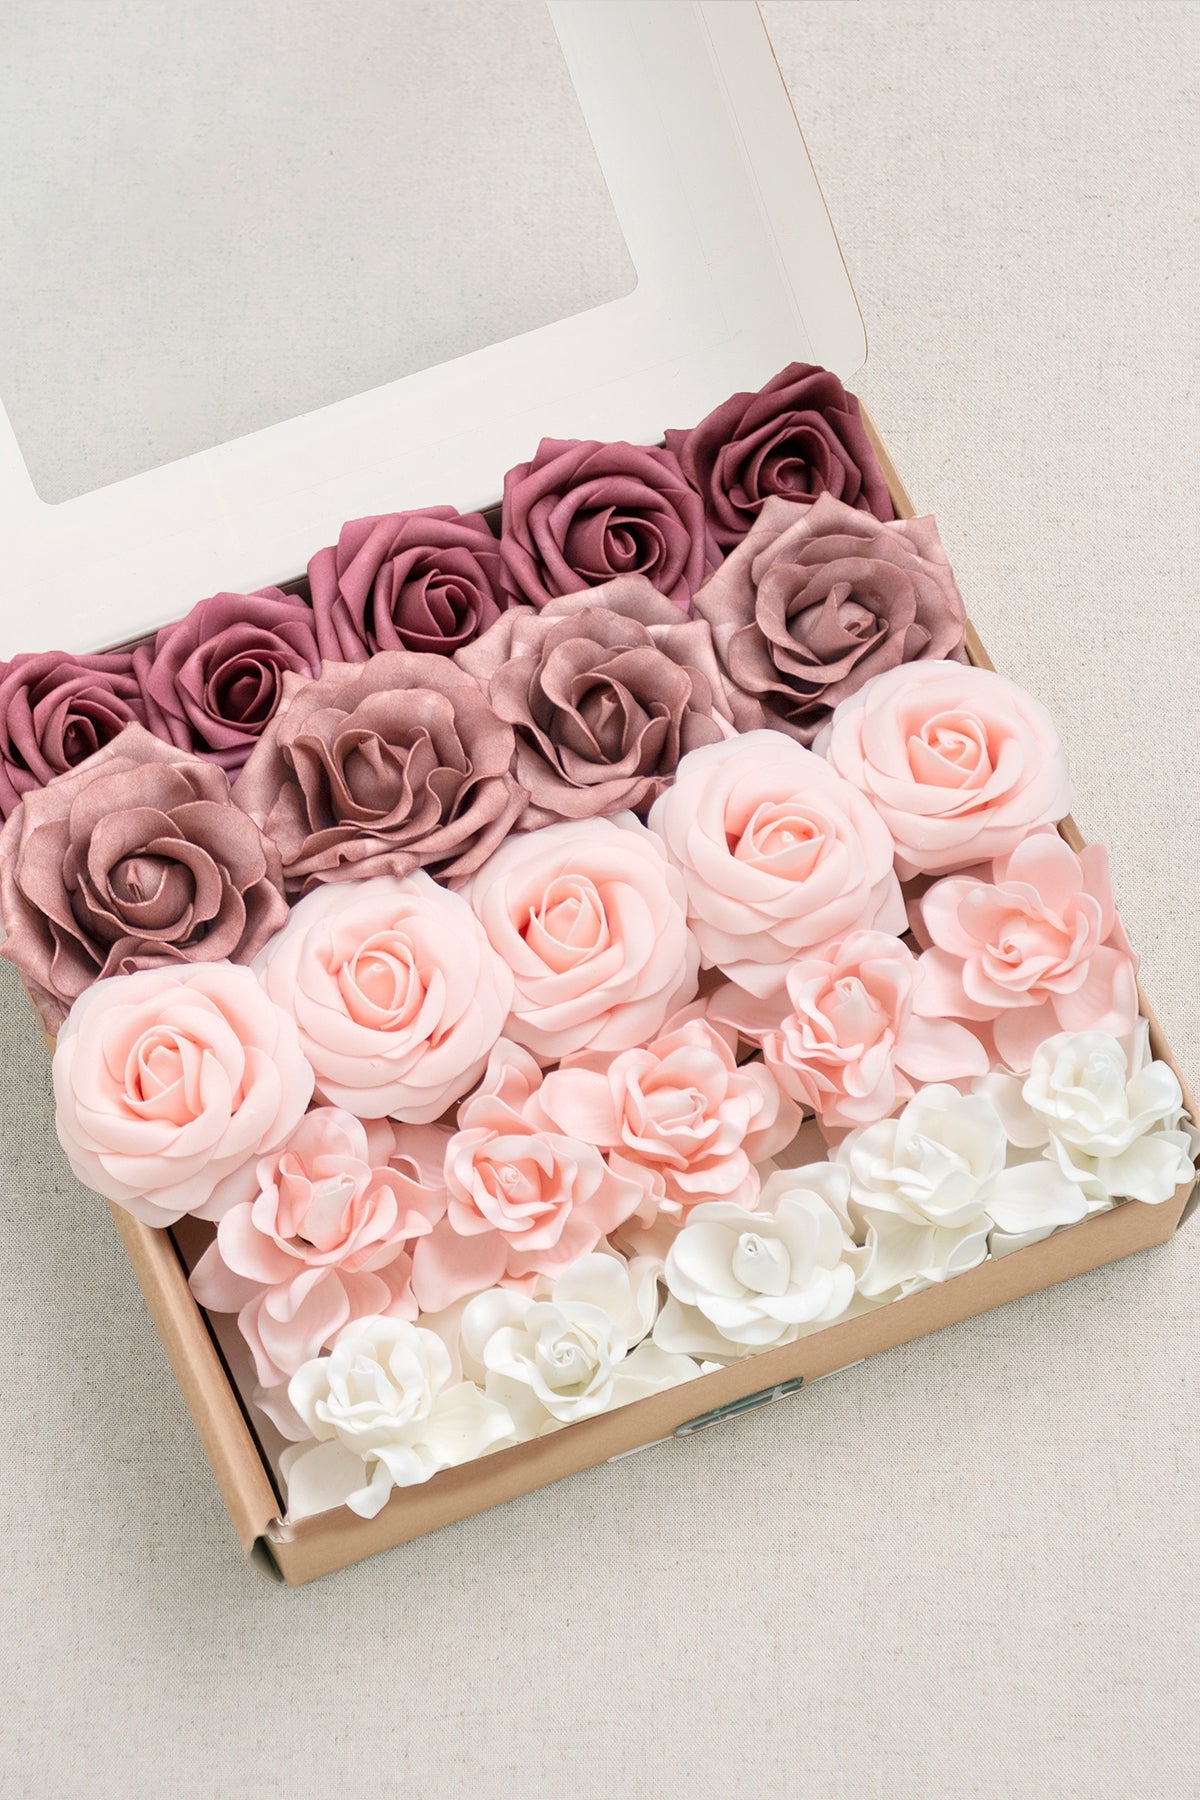 Basic Flower Boxes - 36 Colors